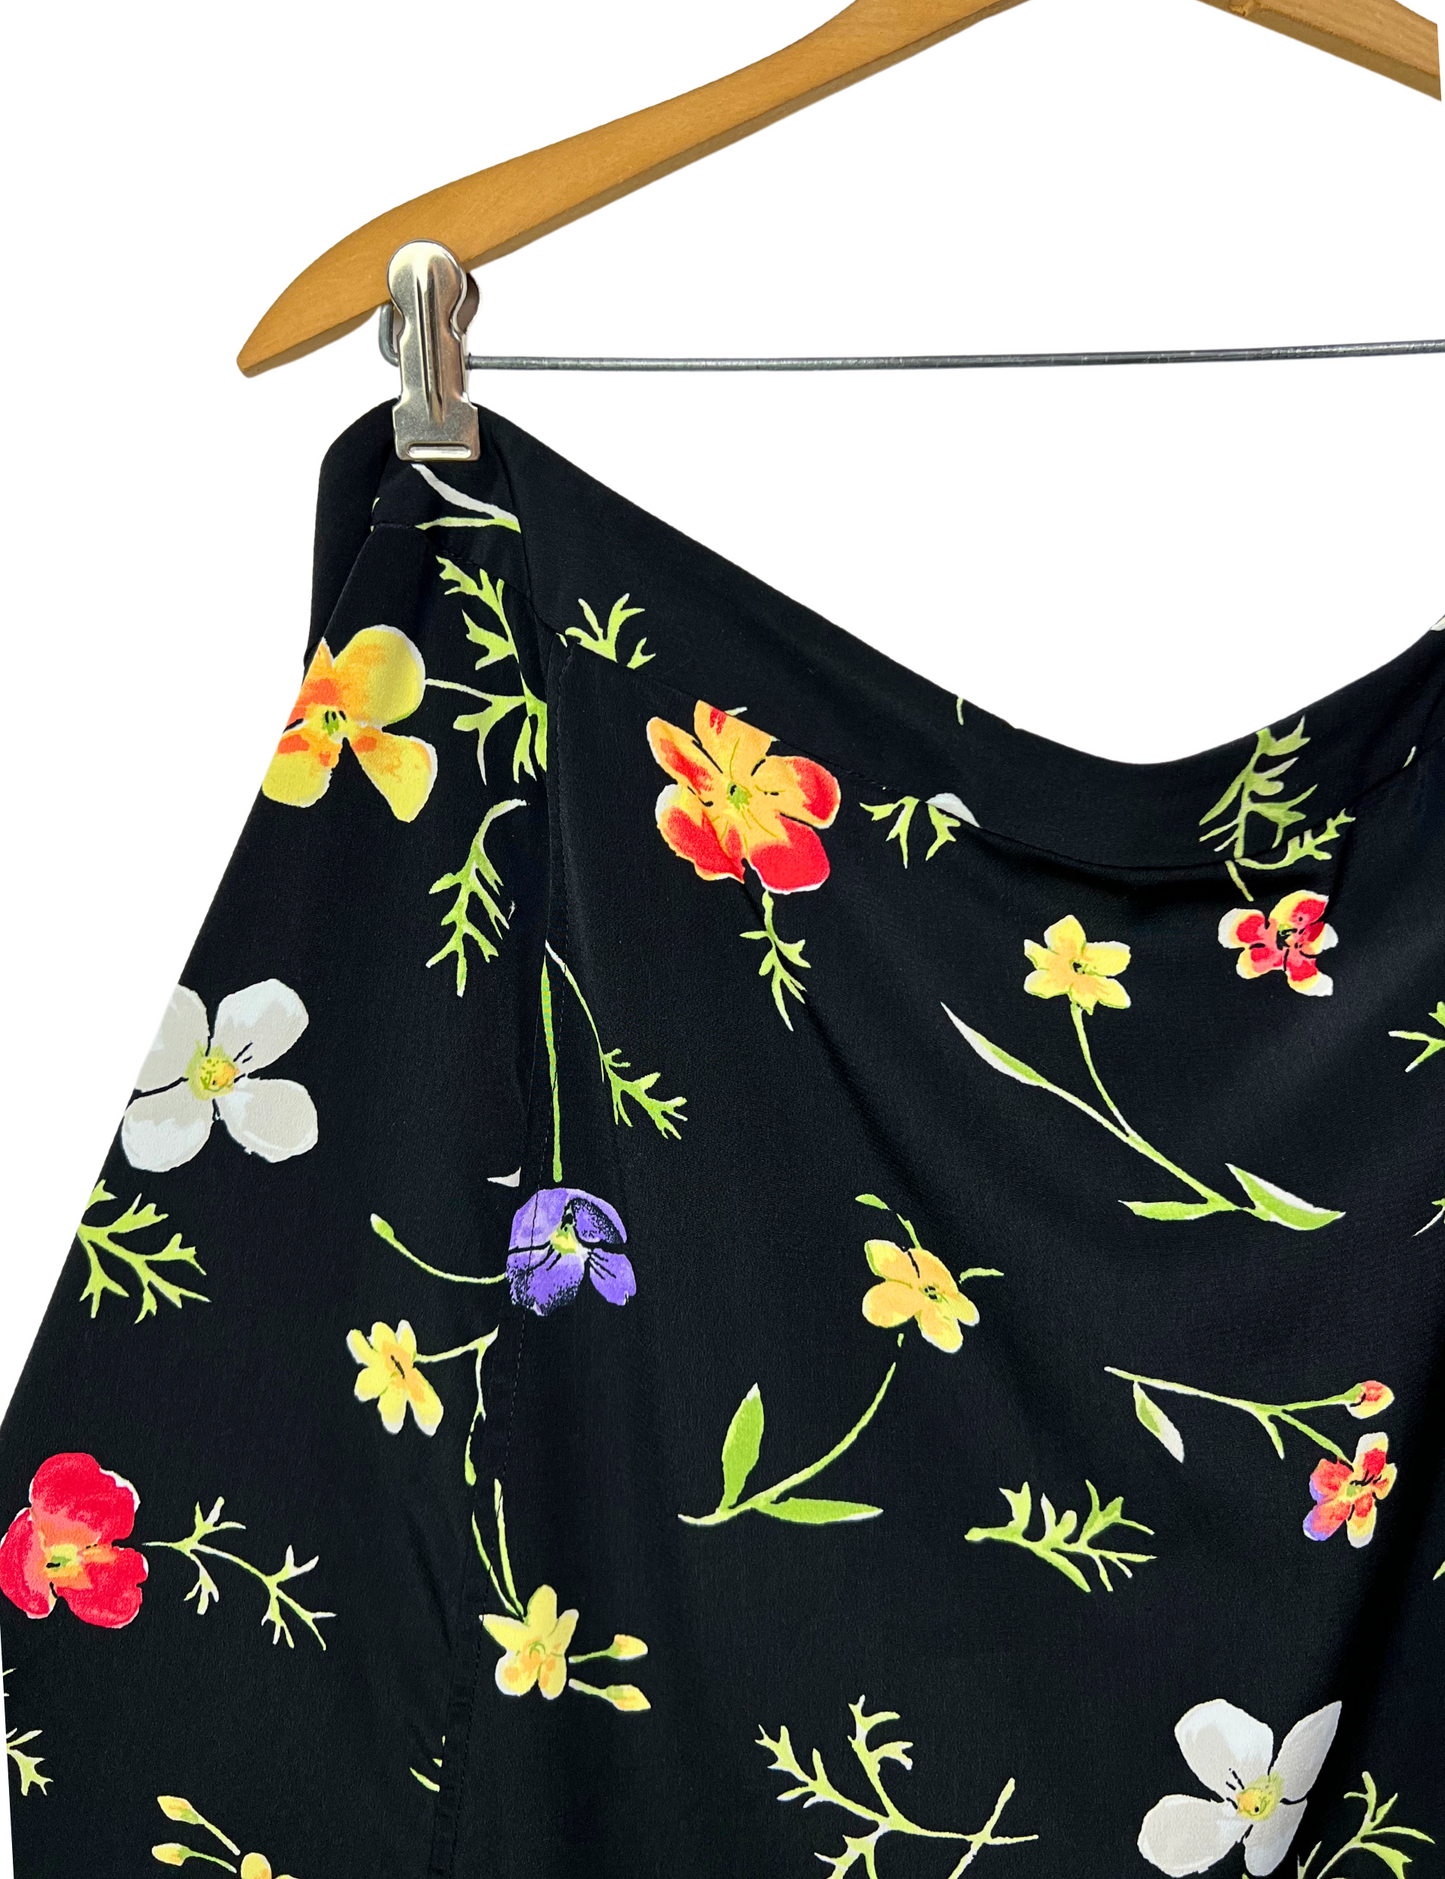 90’s Plus Size Floral Circle Skirt Size 24W